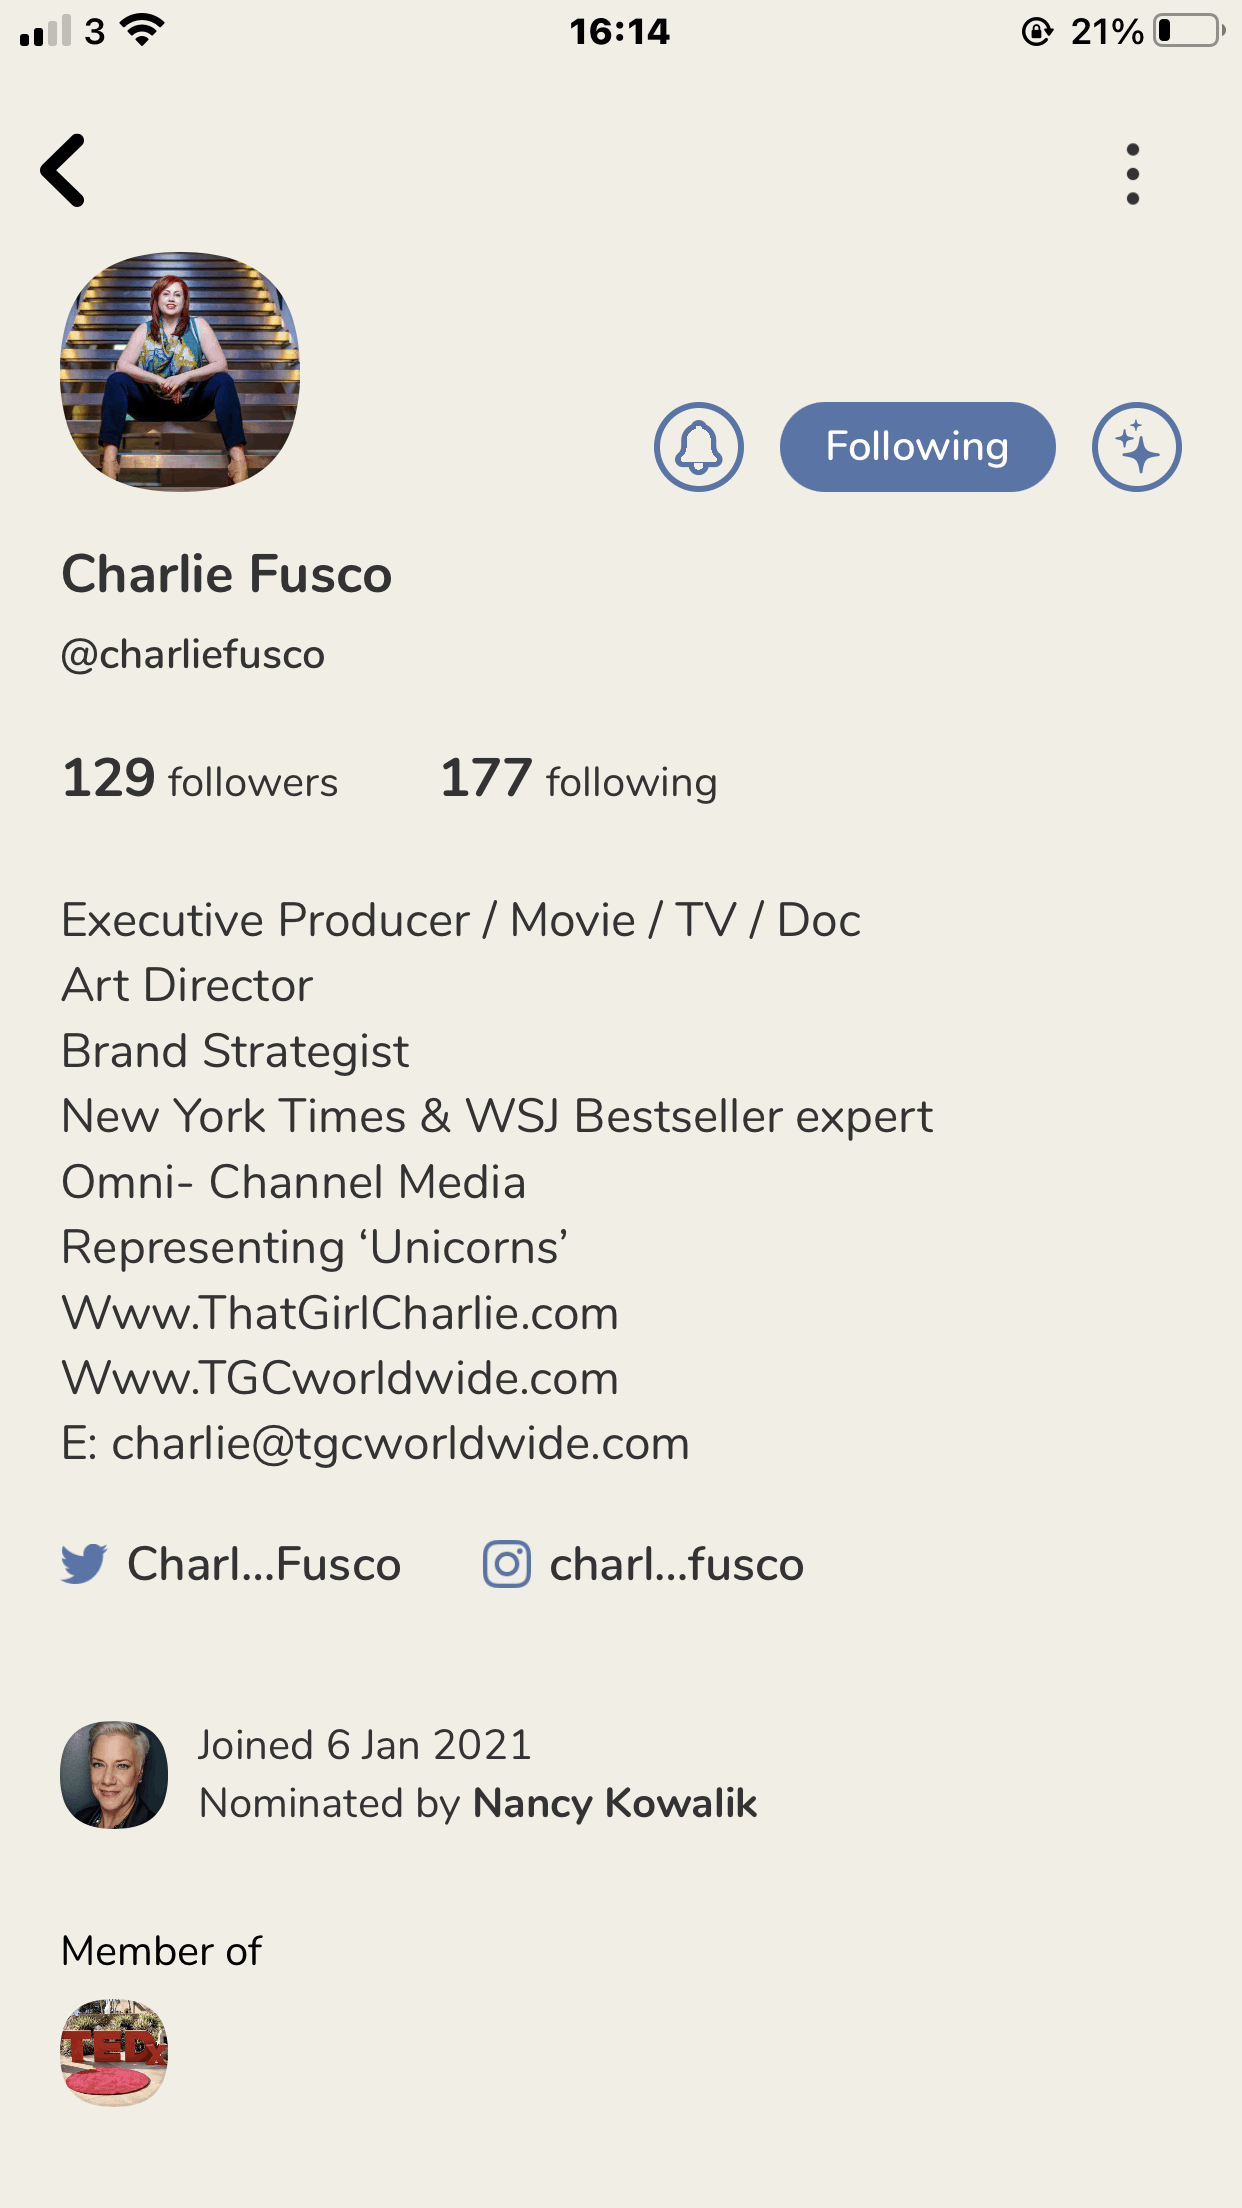 Charlie Fusco's clubhouse profile